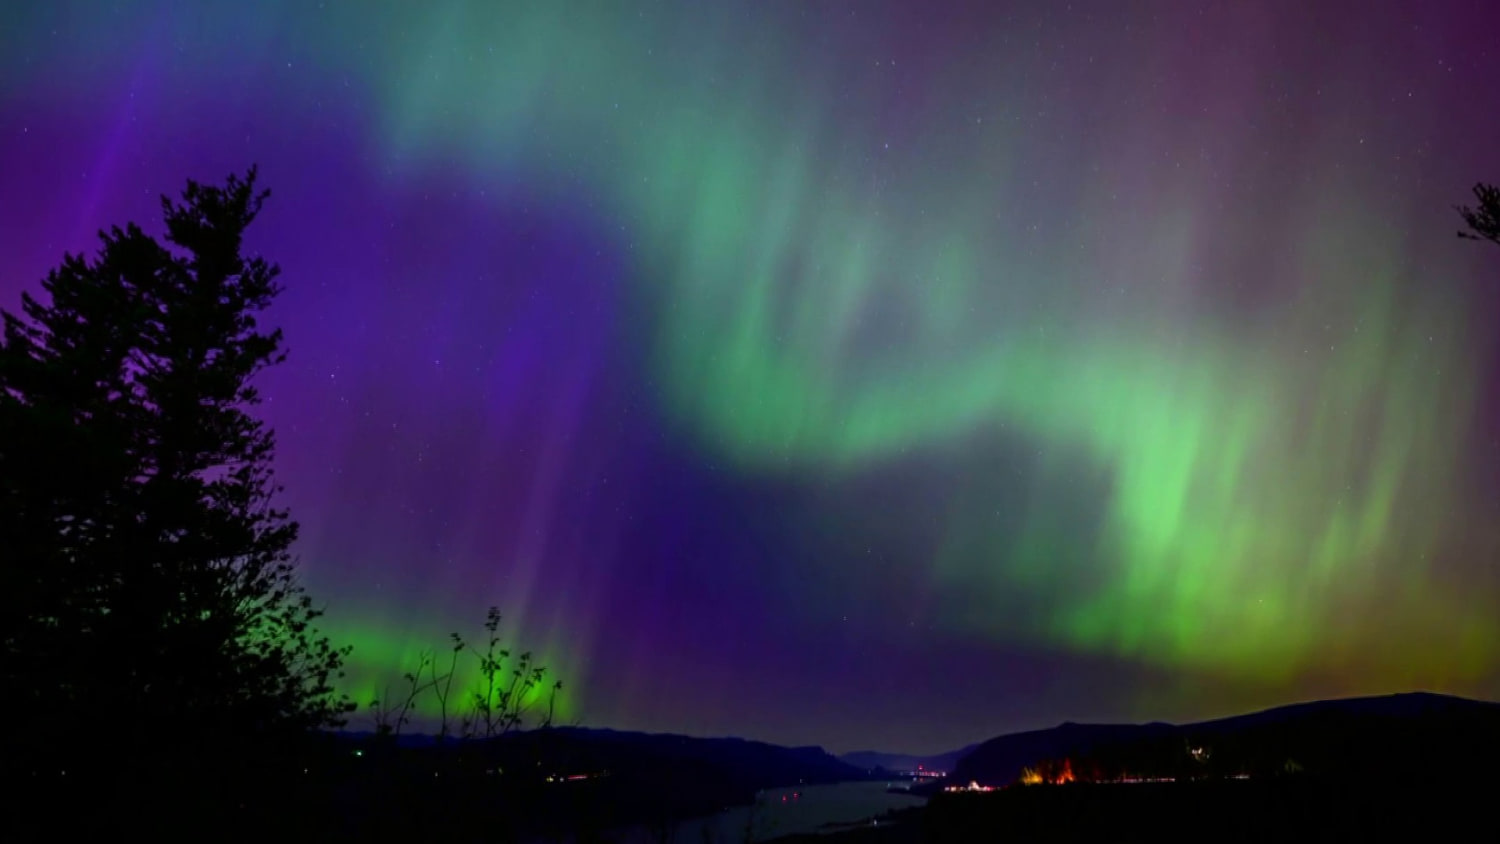 Stunning display of Northern Lights seen around the world